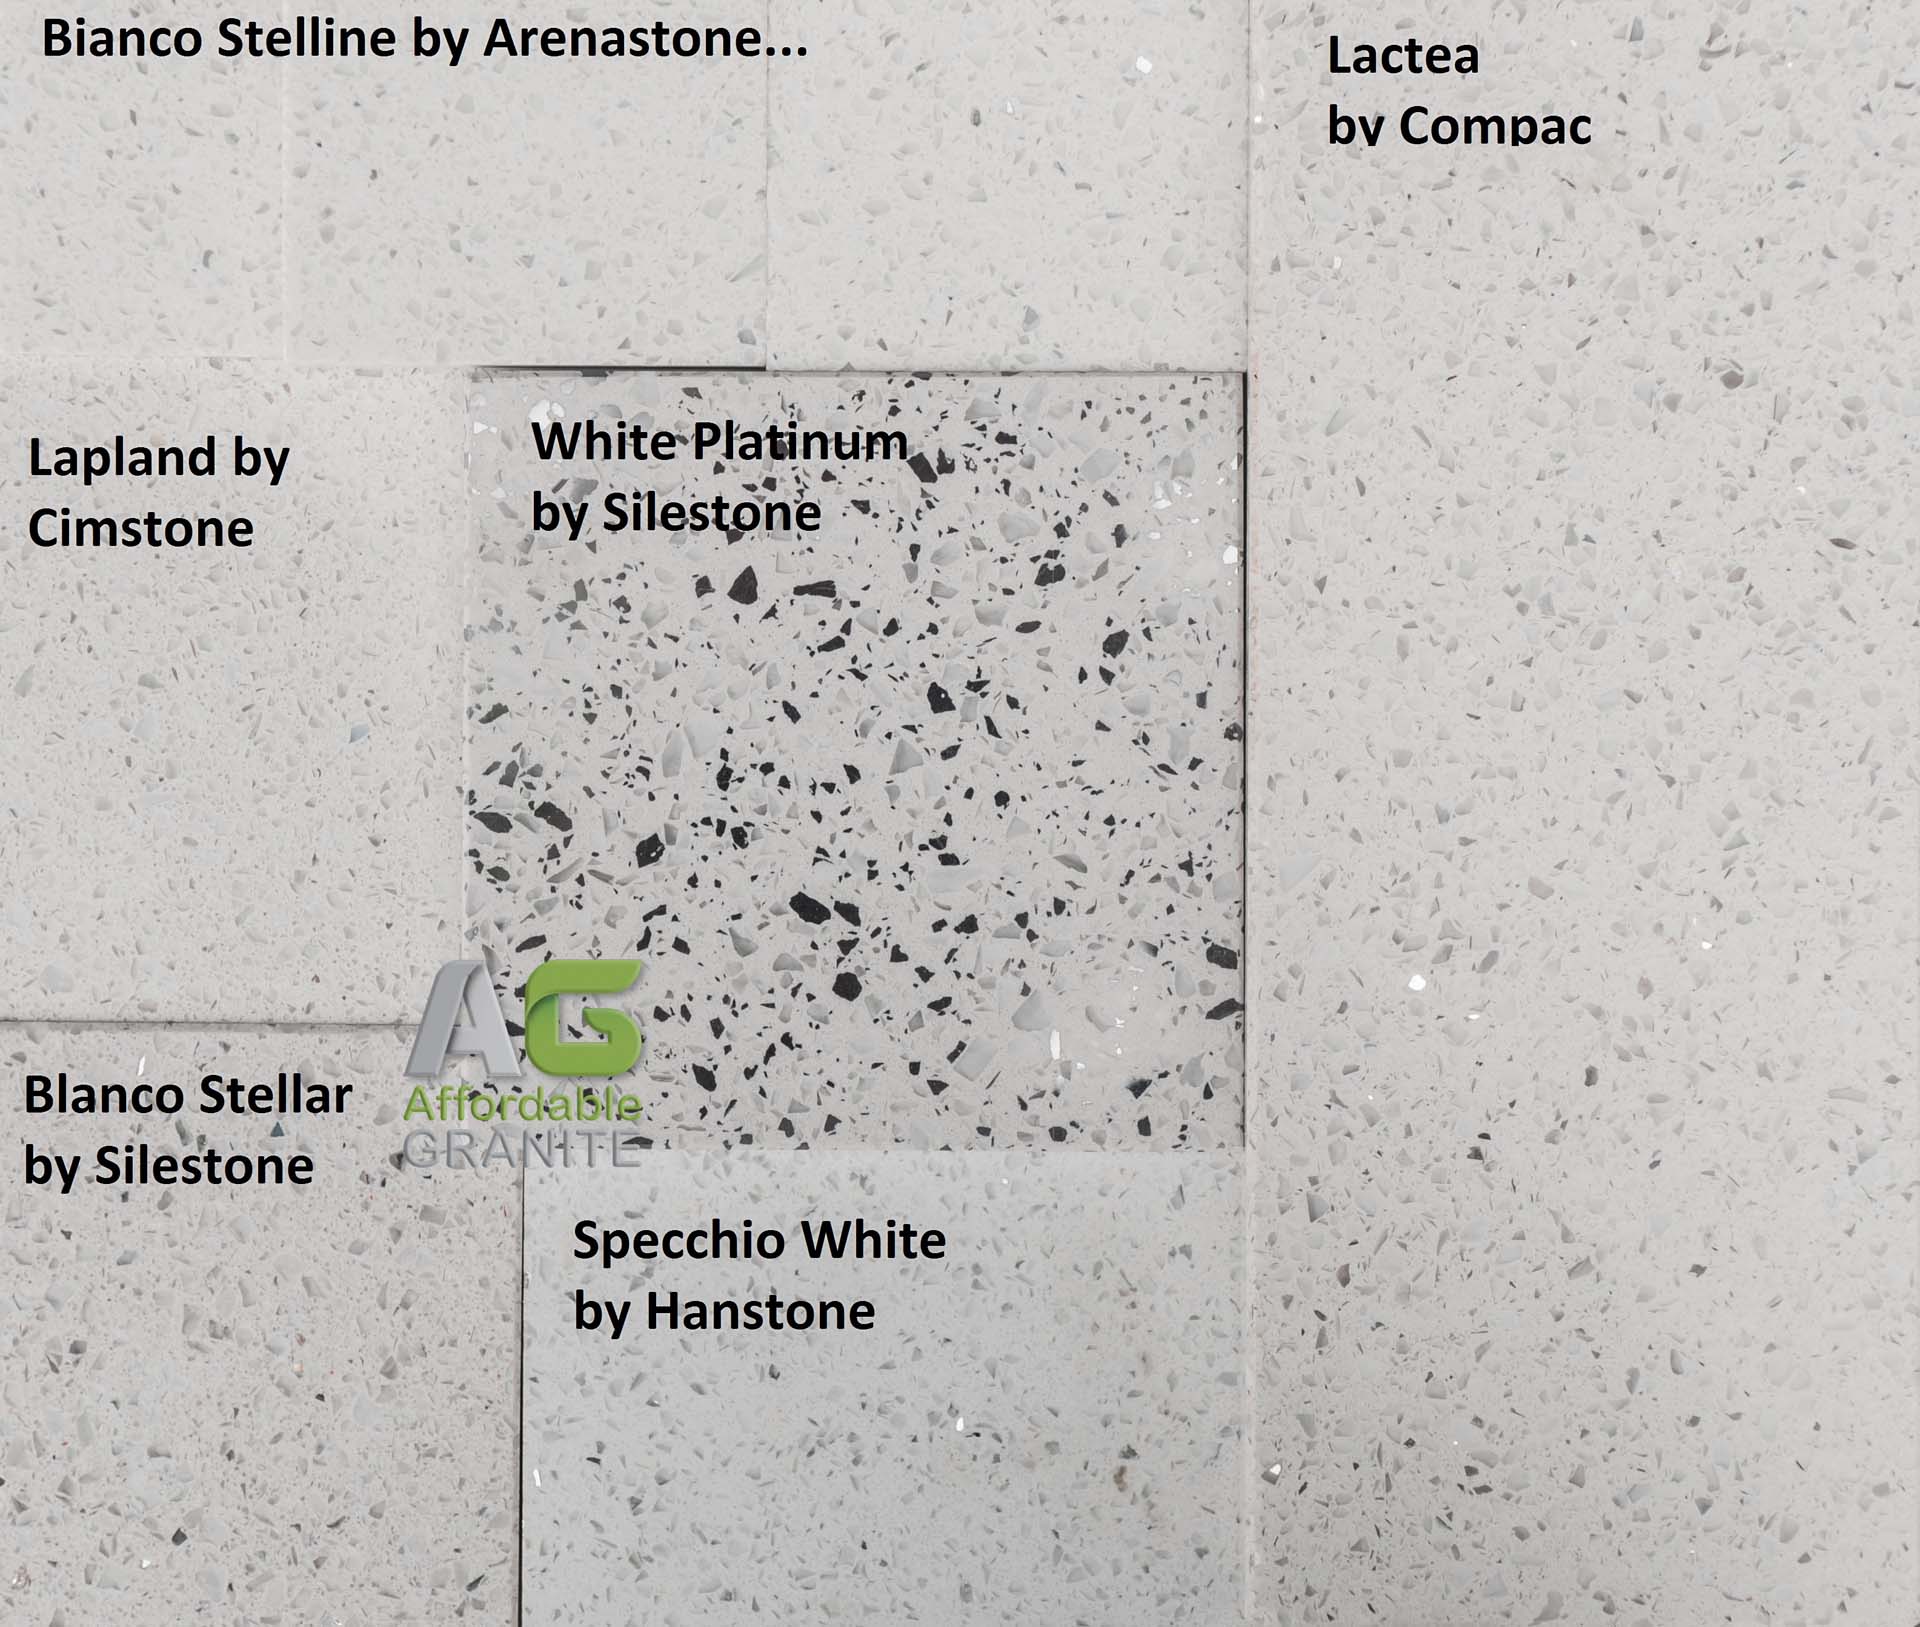 120808 arenastone bianco stelline silestone blanco stellar white platinum lapland cimstone compac lactea hanstone specchio white